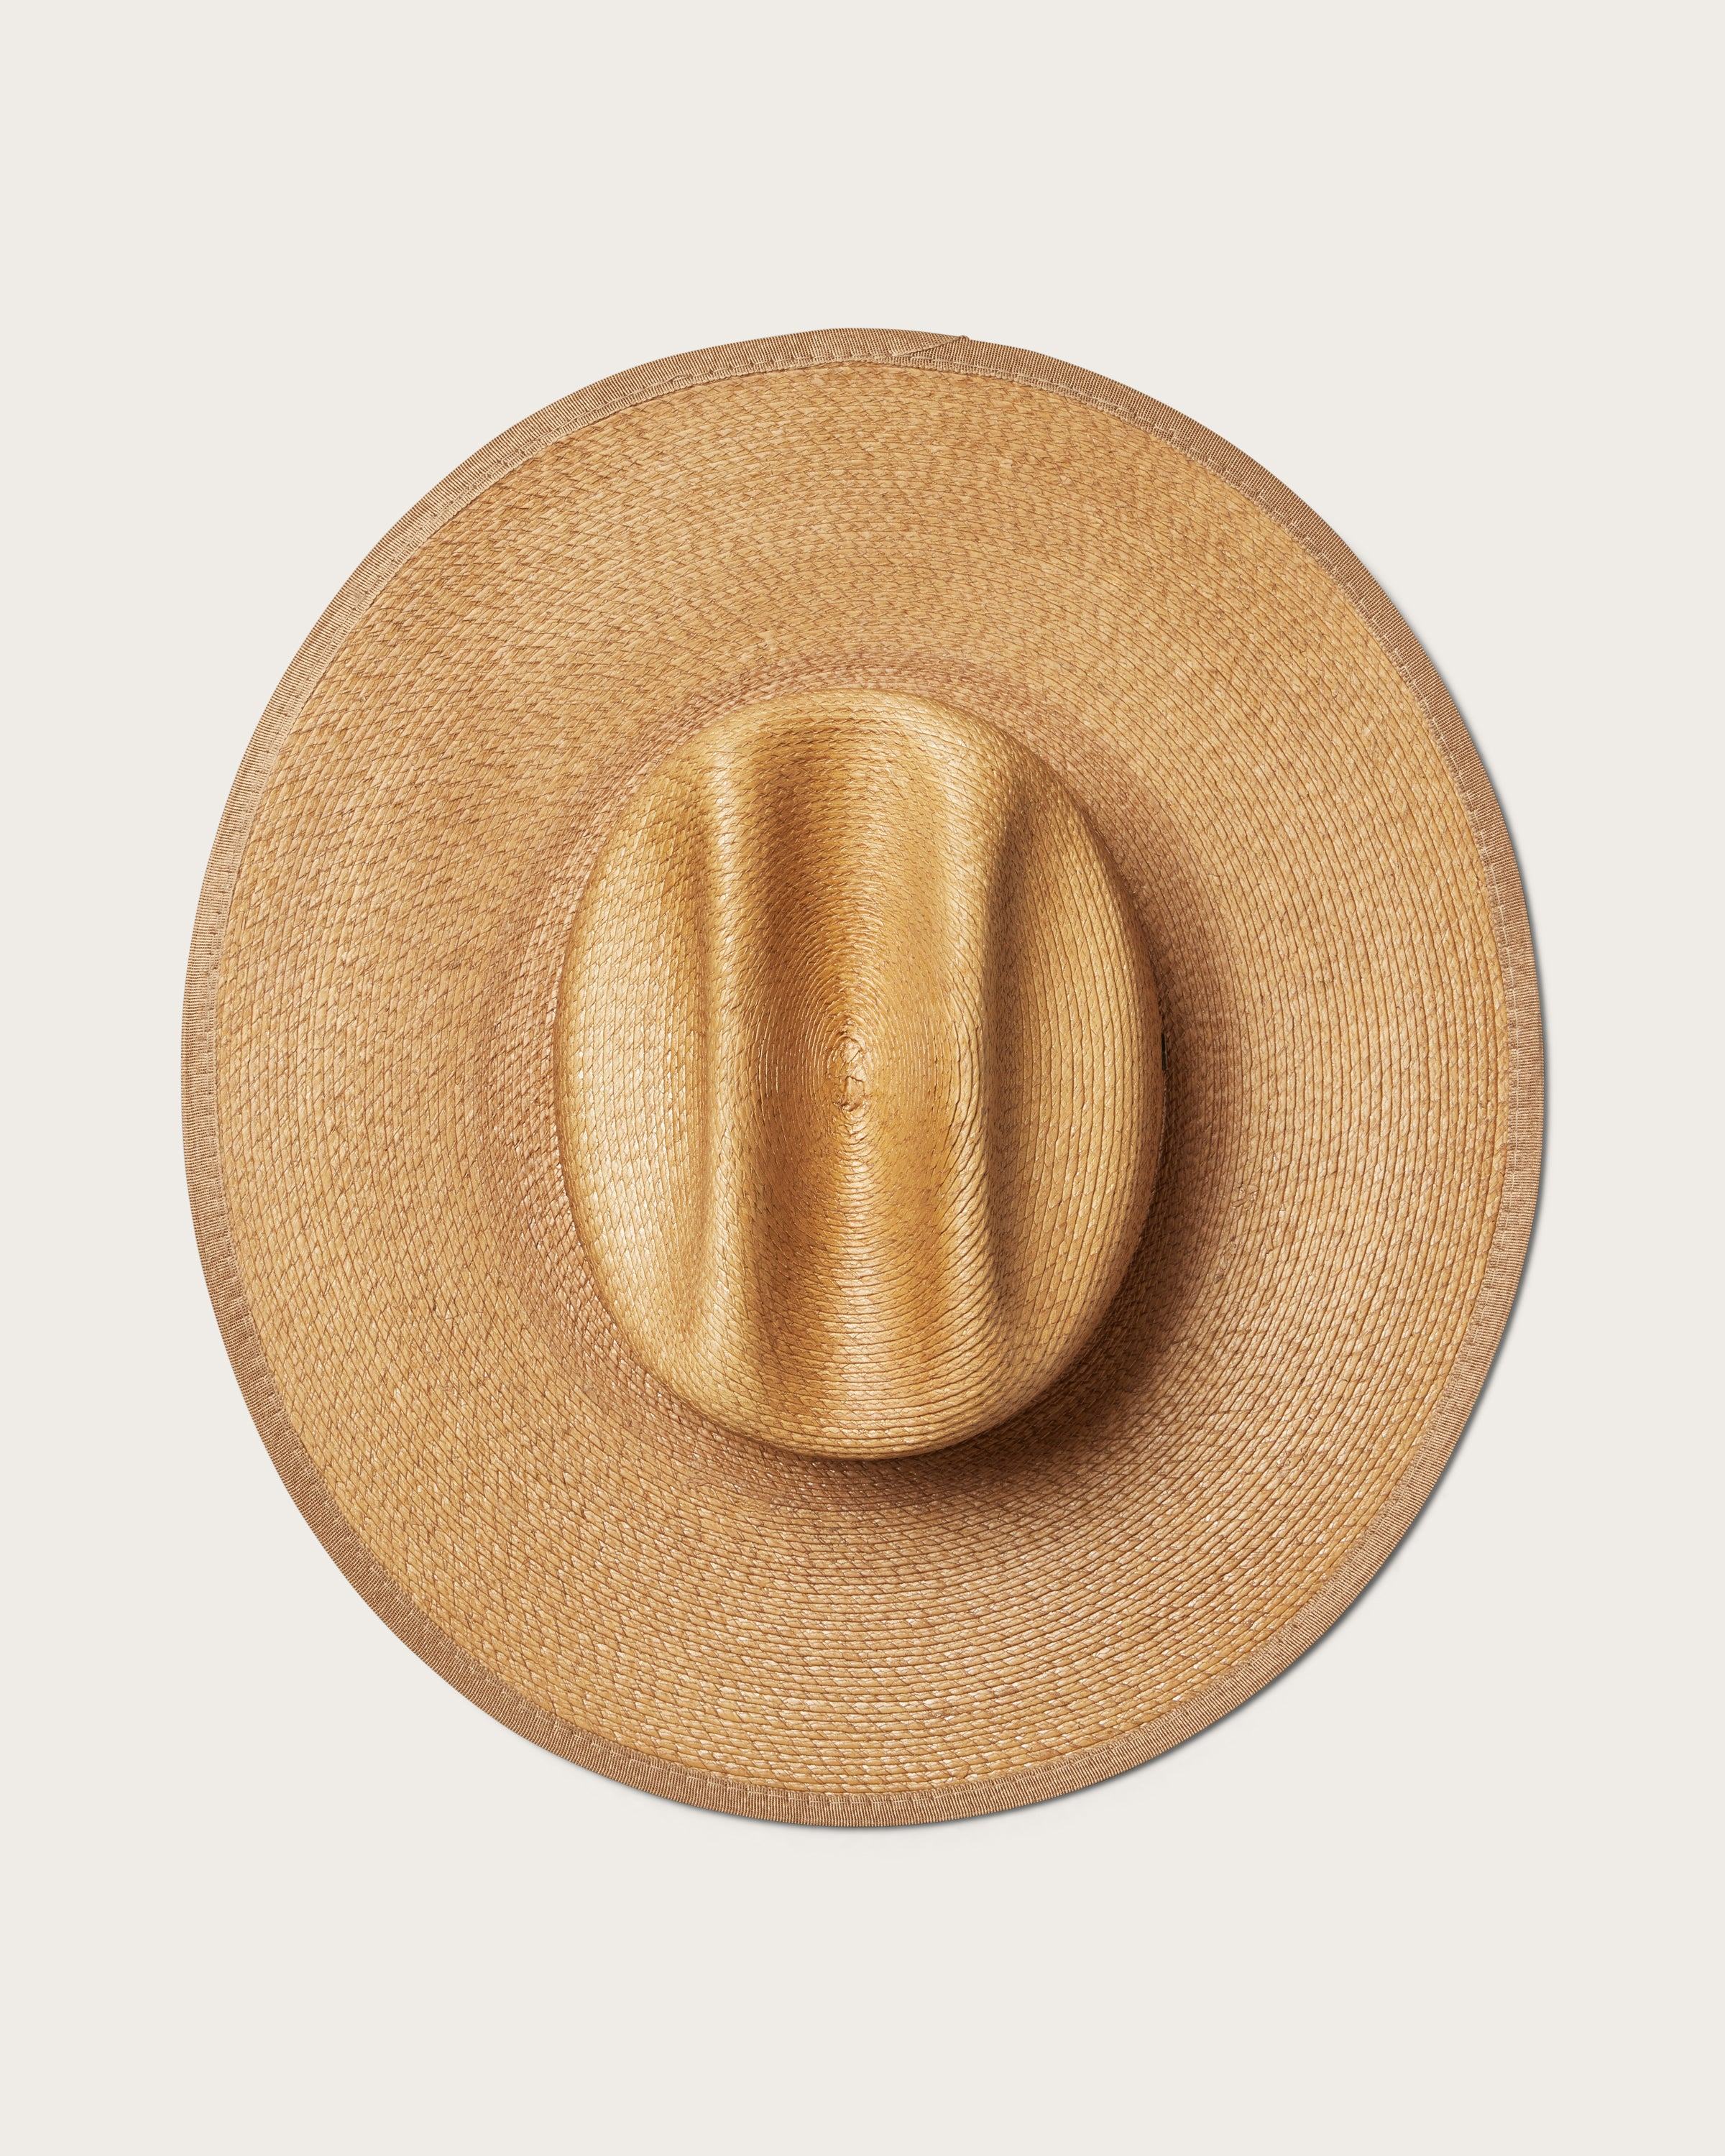 Toluca in Saddle - undefined - Hemlock Hat Co. Premium